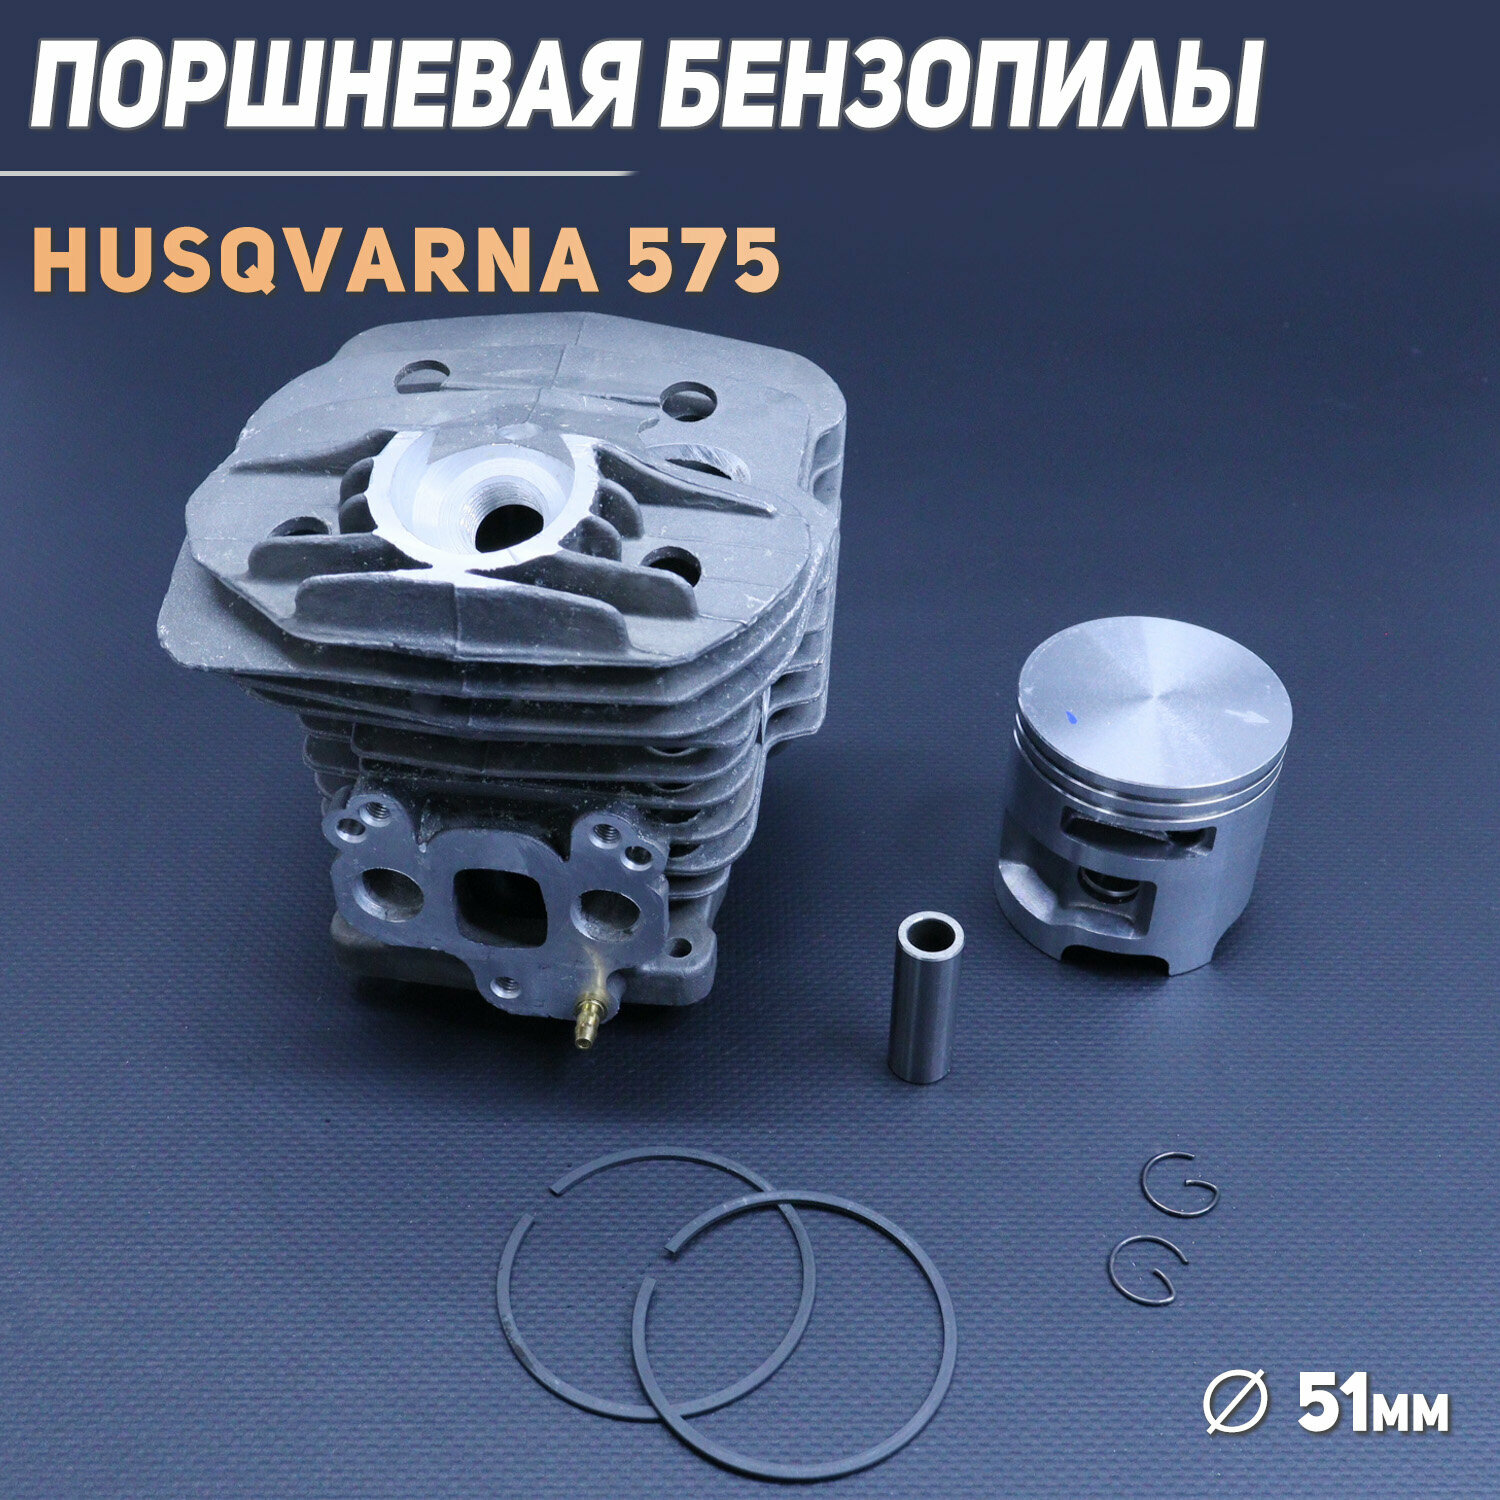 Поршневая бензопилы (ЦПГ) Husqvarna 575 (D-51) "WOODMAN" (mod.A)